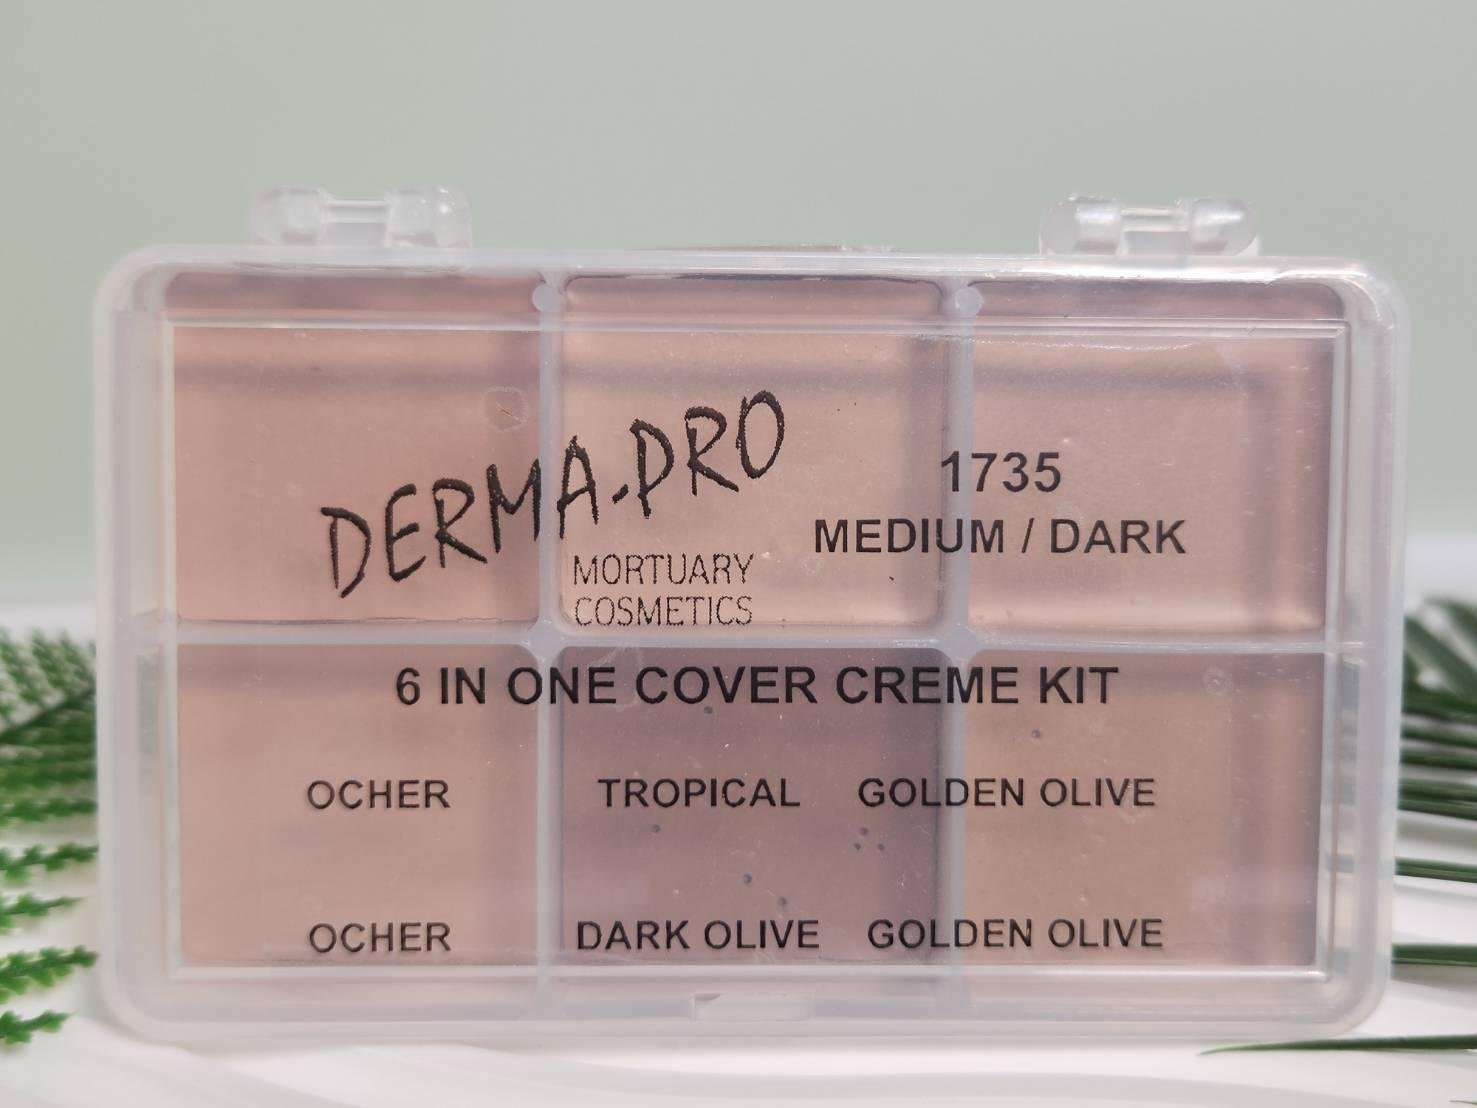 6 in 1 Cover Creme Kit (MEDIUM/DARK)